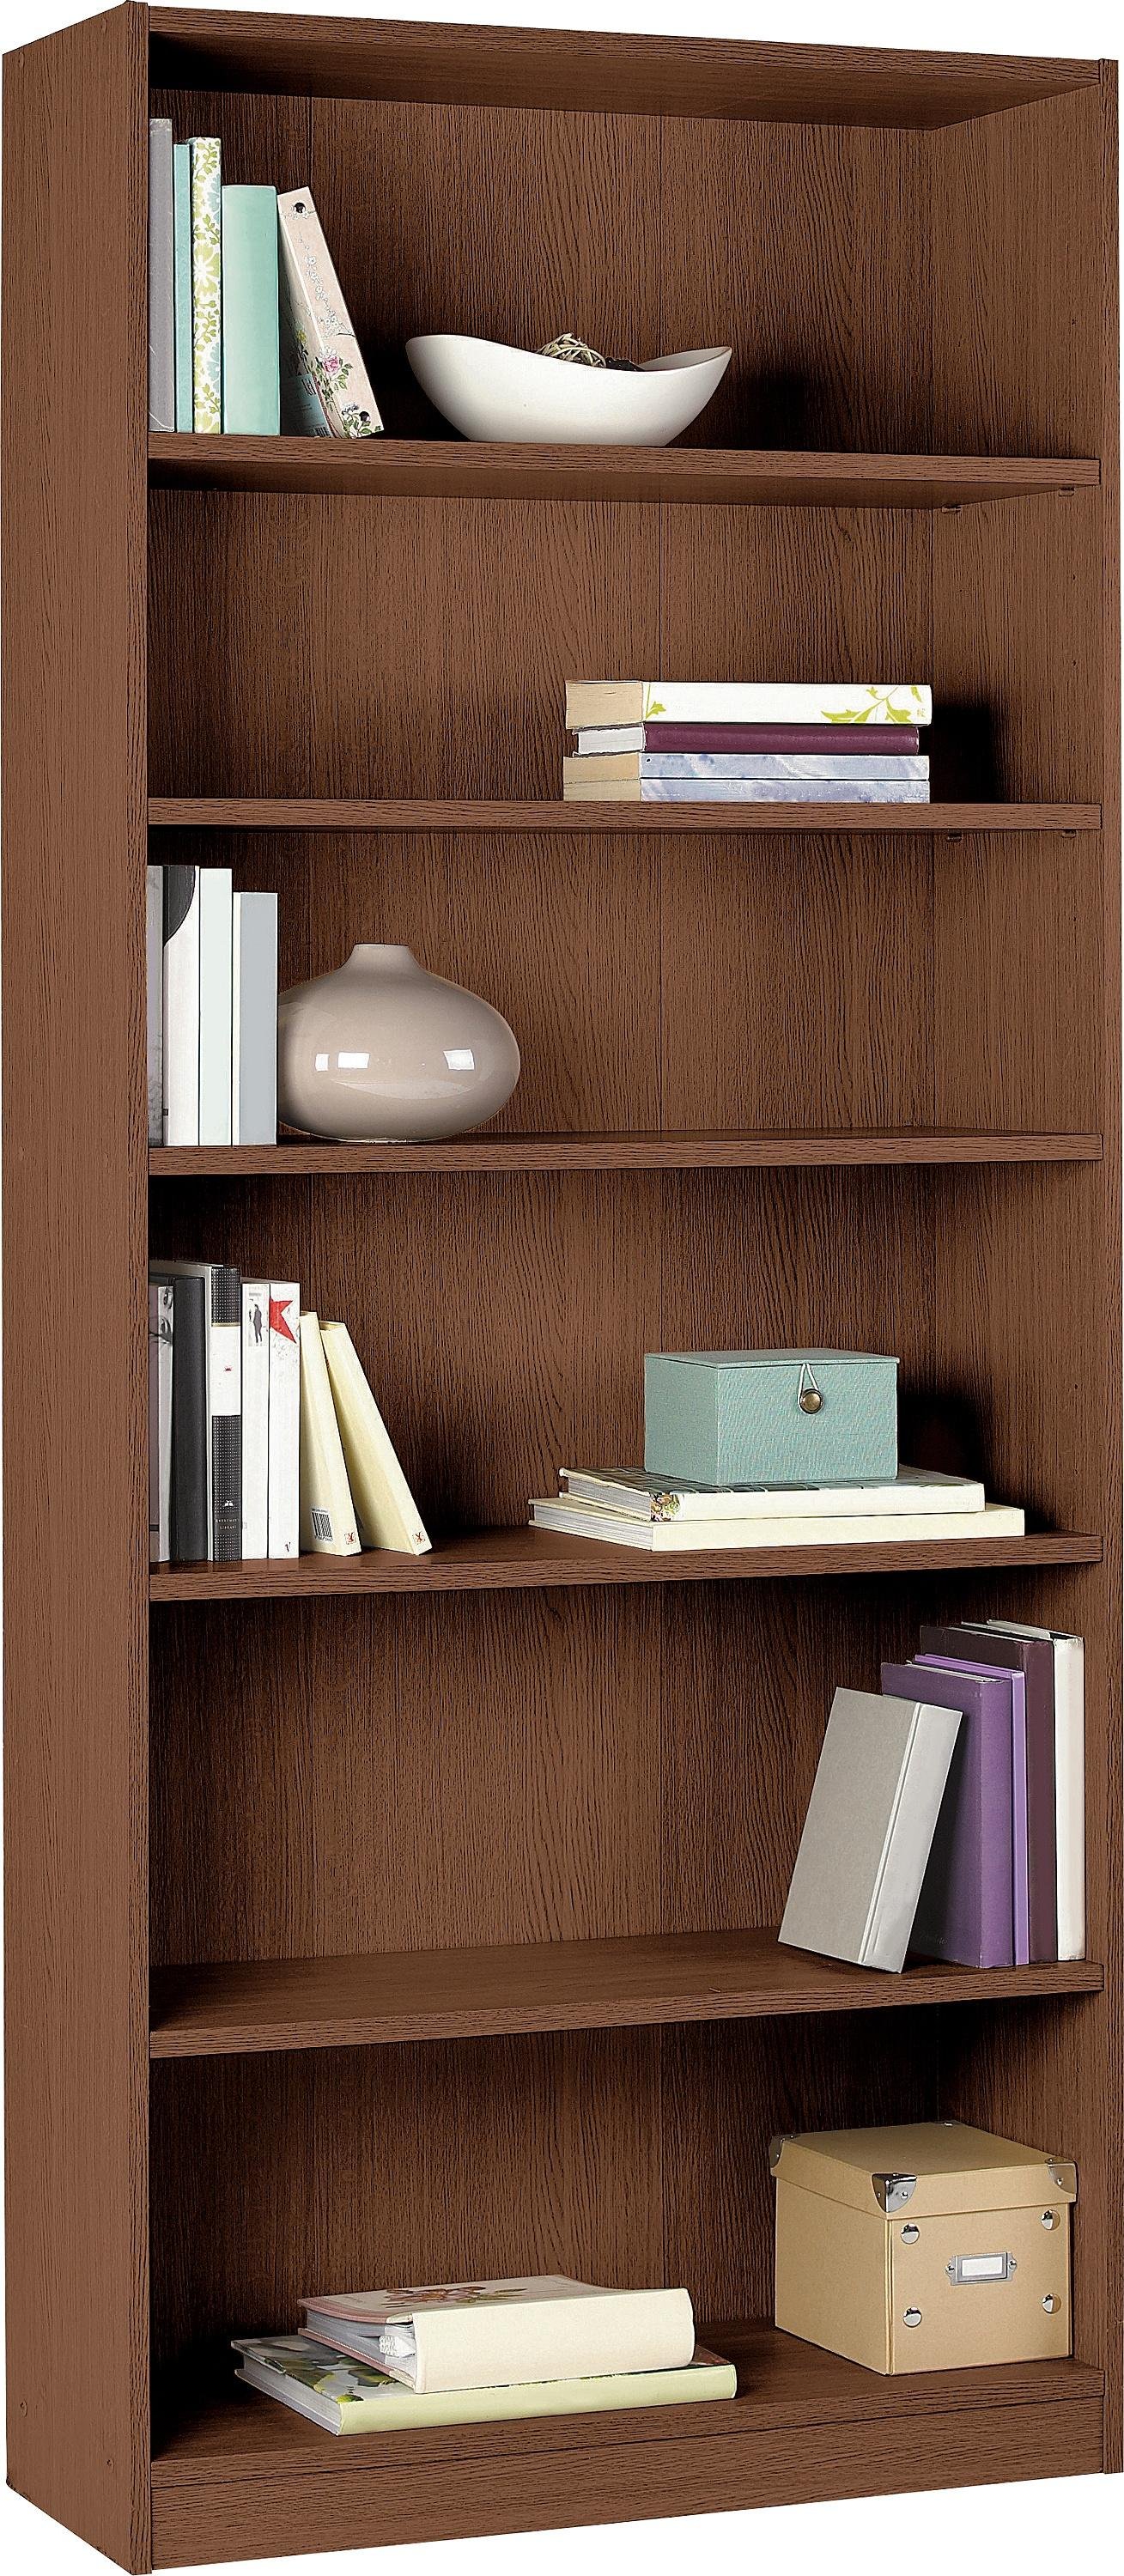 Argos Home Maine 5 Shelf Wide Deep Bookcase - Walnut Effect